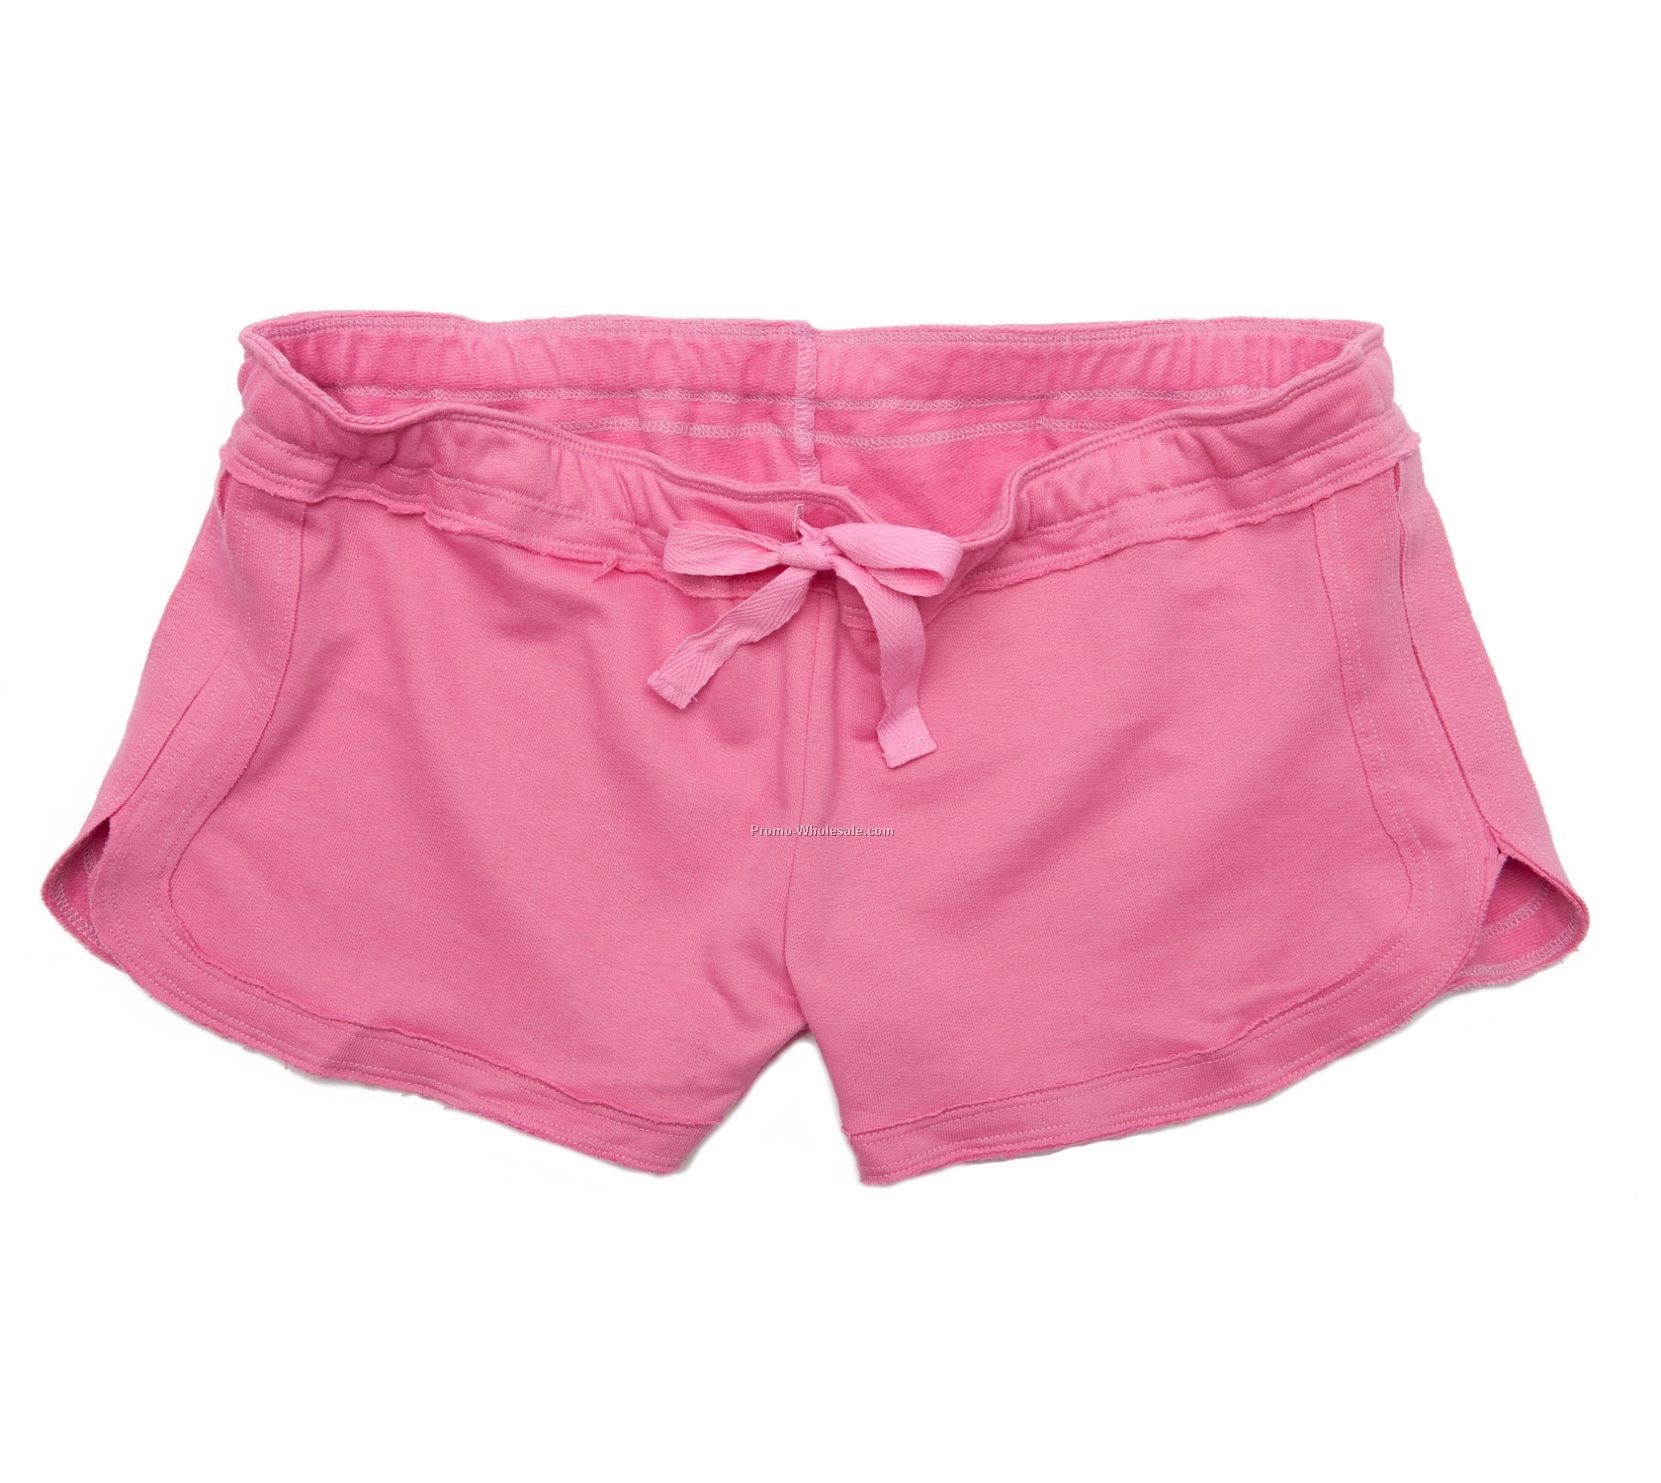 Adult Pink Chrissy Shorts (Xs-xl)